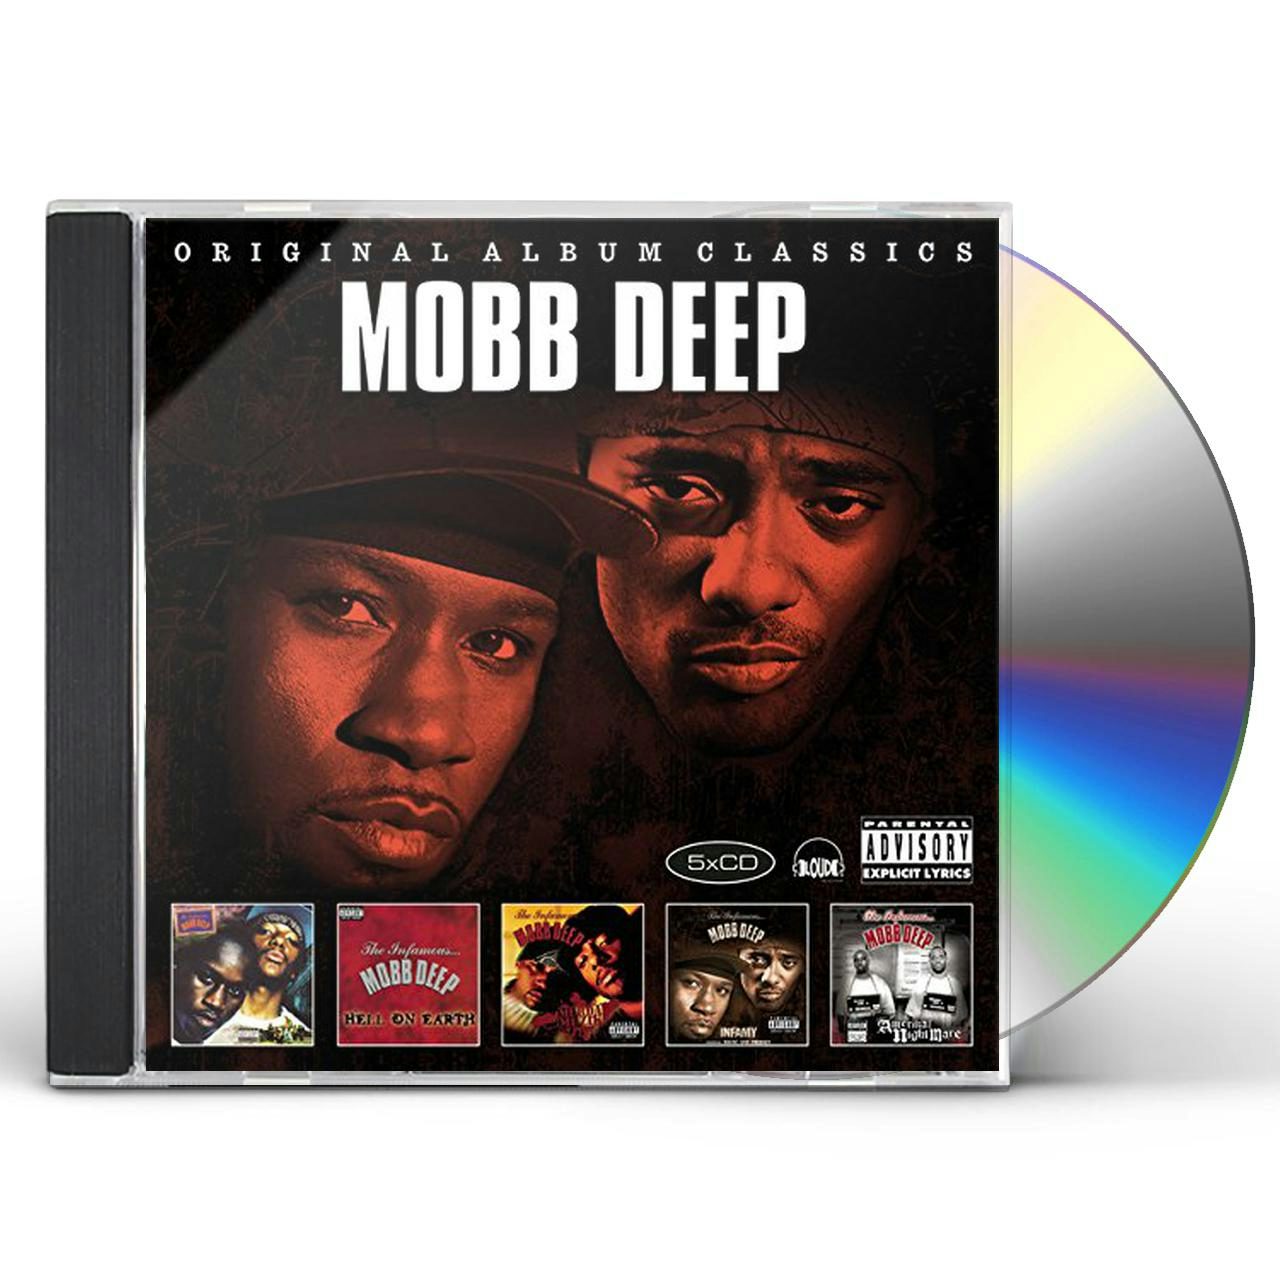 Mobb Deep ORIGINAL ALBUM CLASSICS CD